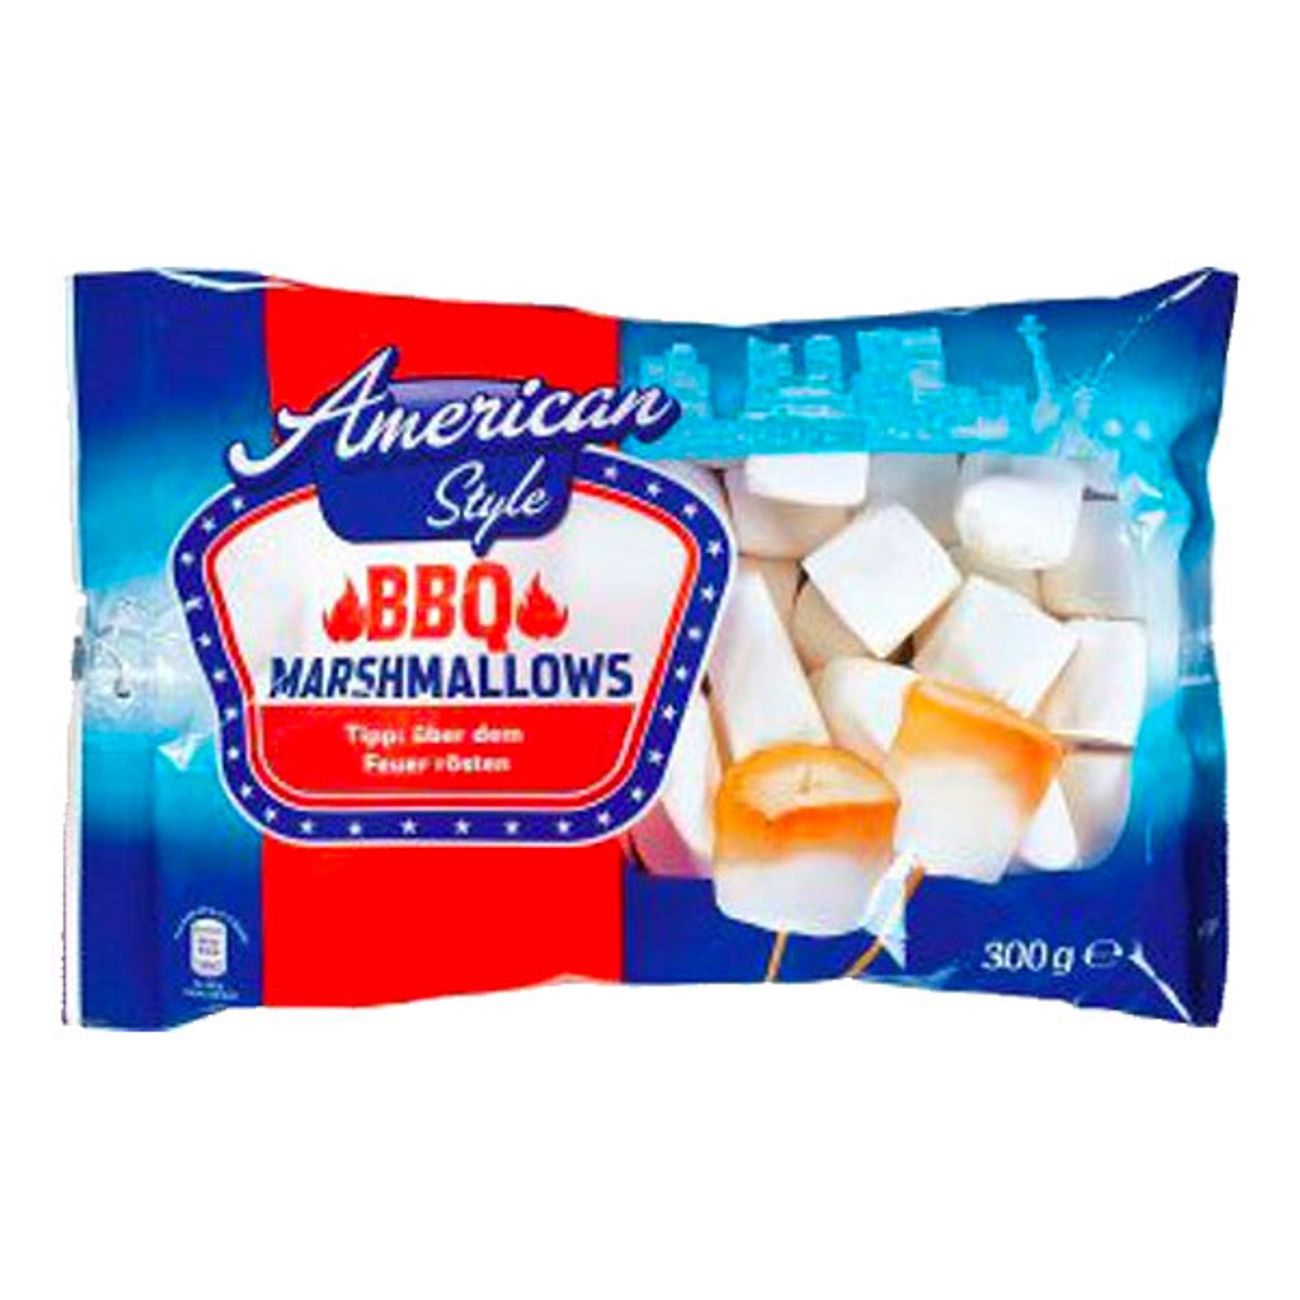 bbq-marshmallows-1